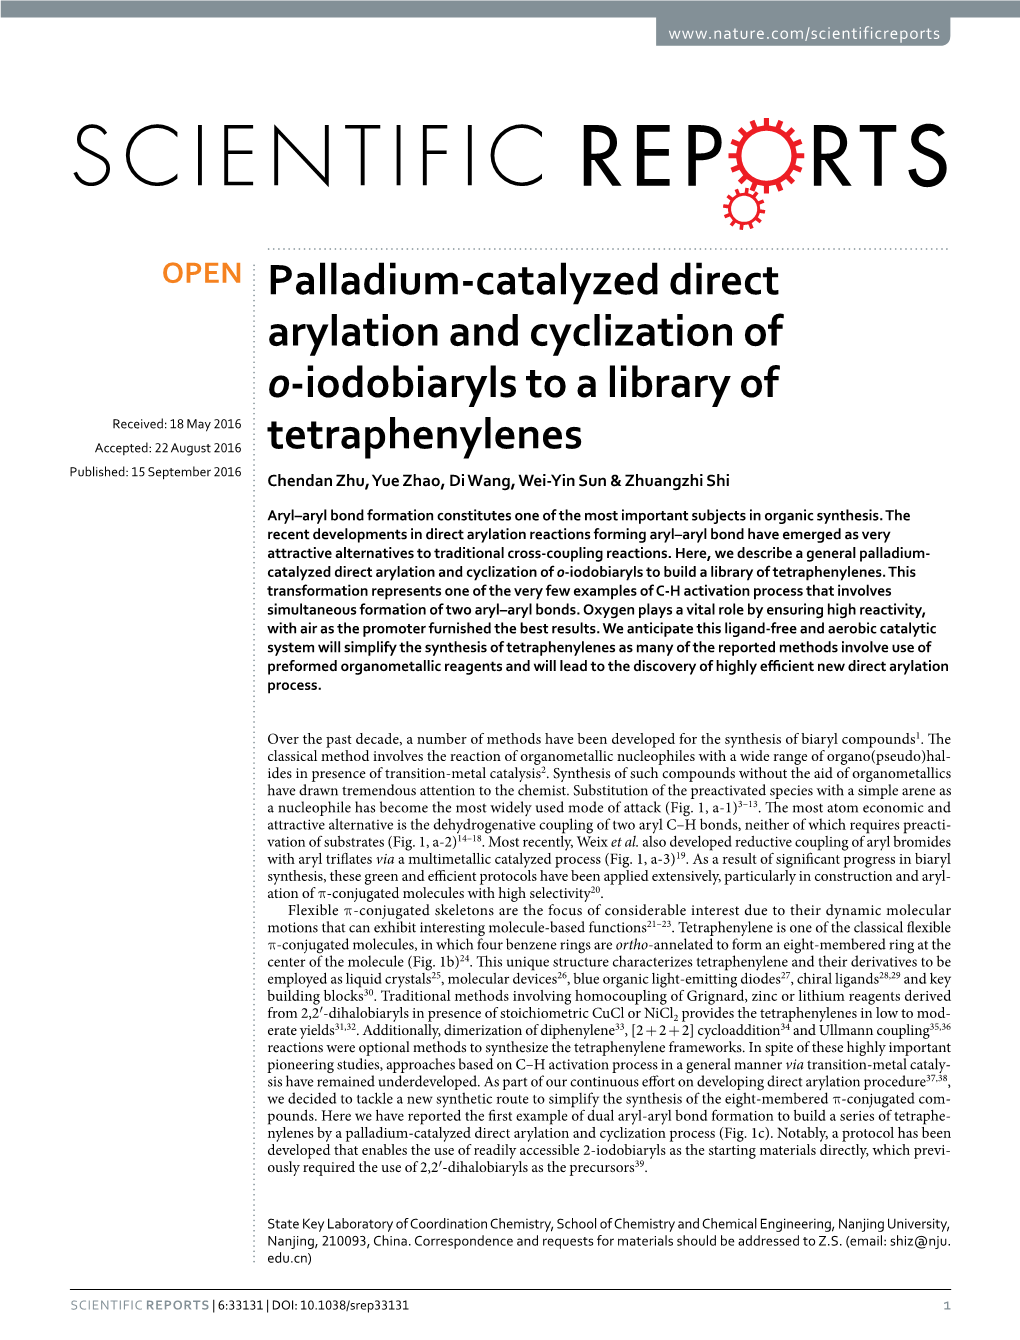 Palladium-Catalyzed Direct Arylation and Cyclization of O-Iodobiaryls to A